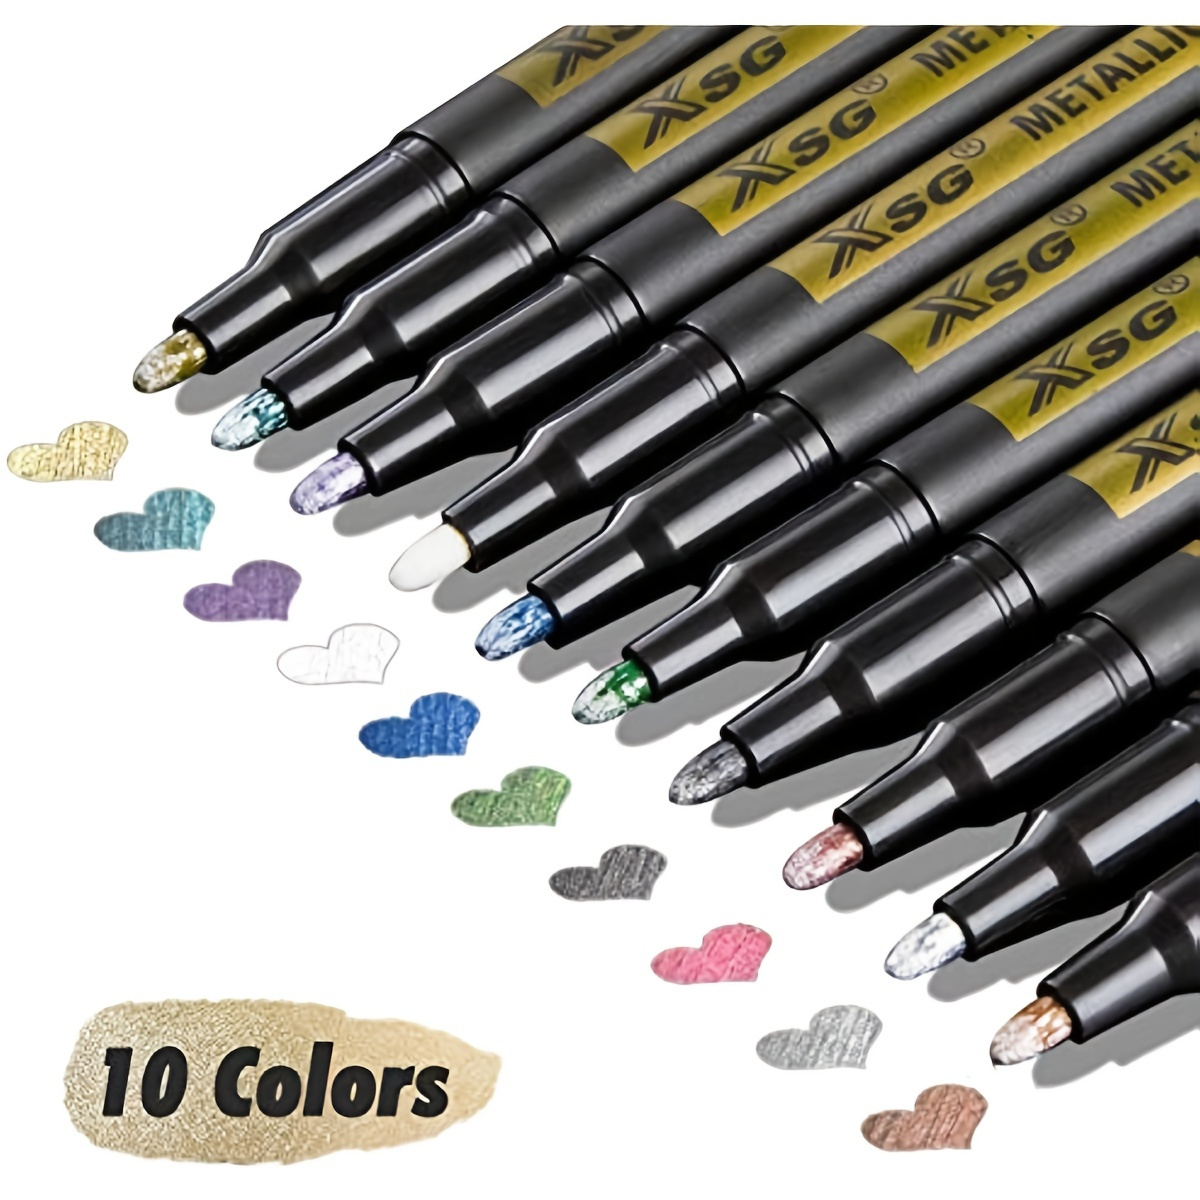 Penkacia Metallic Marker Pens Set of 10 - Water Based Safe Scrapbook  Metallic Paint Markers for Black Paper, Rock,Ceramic, Card Making